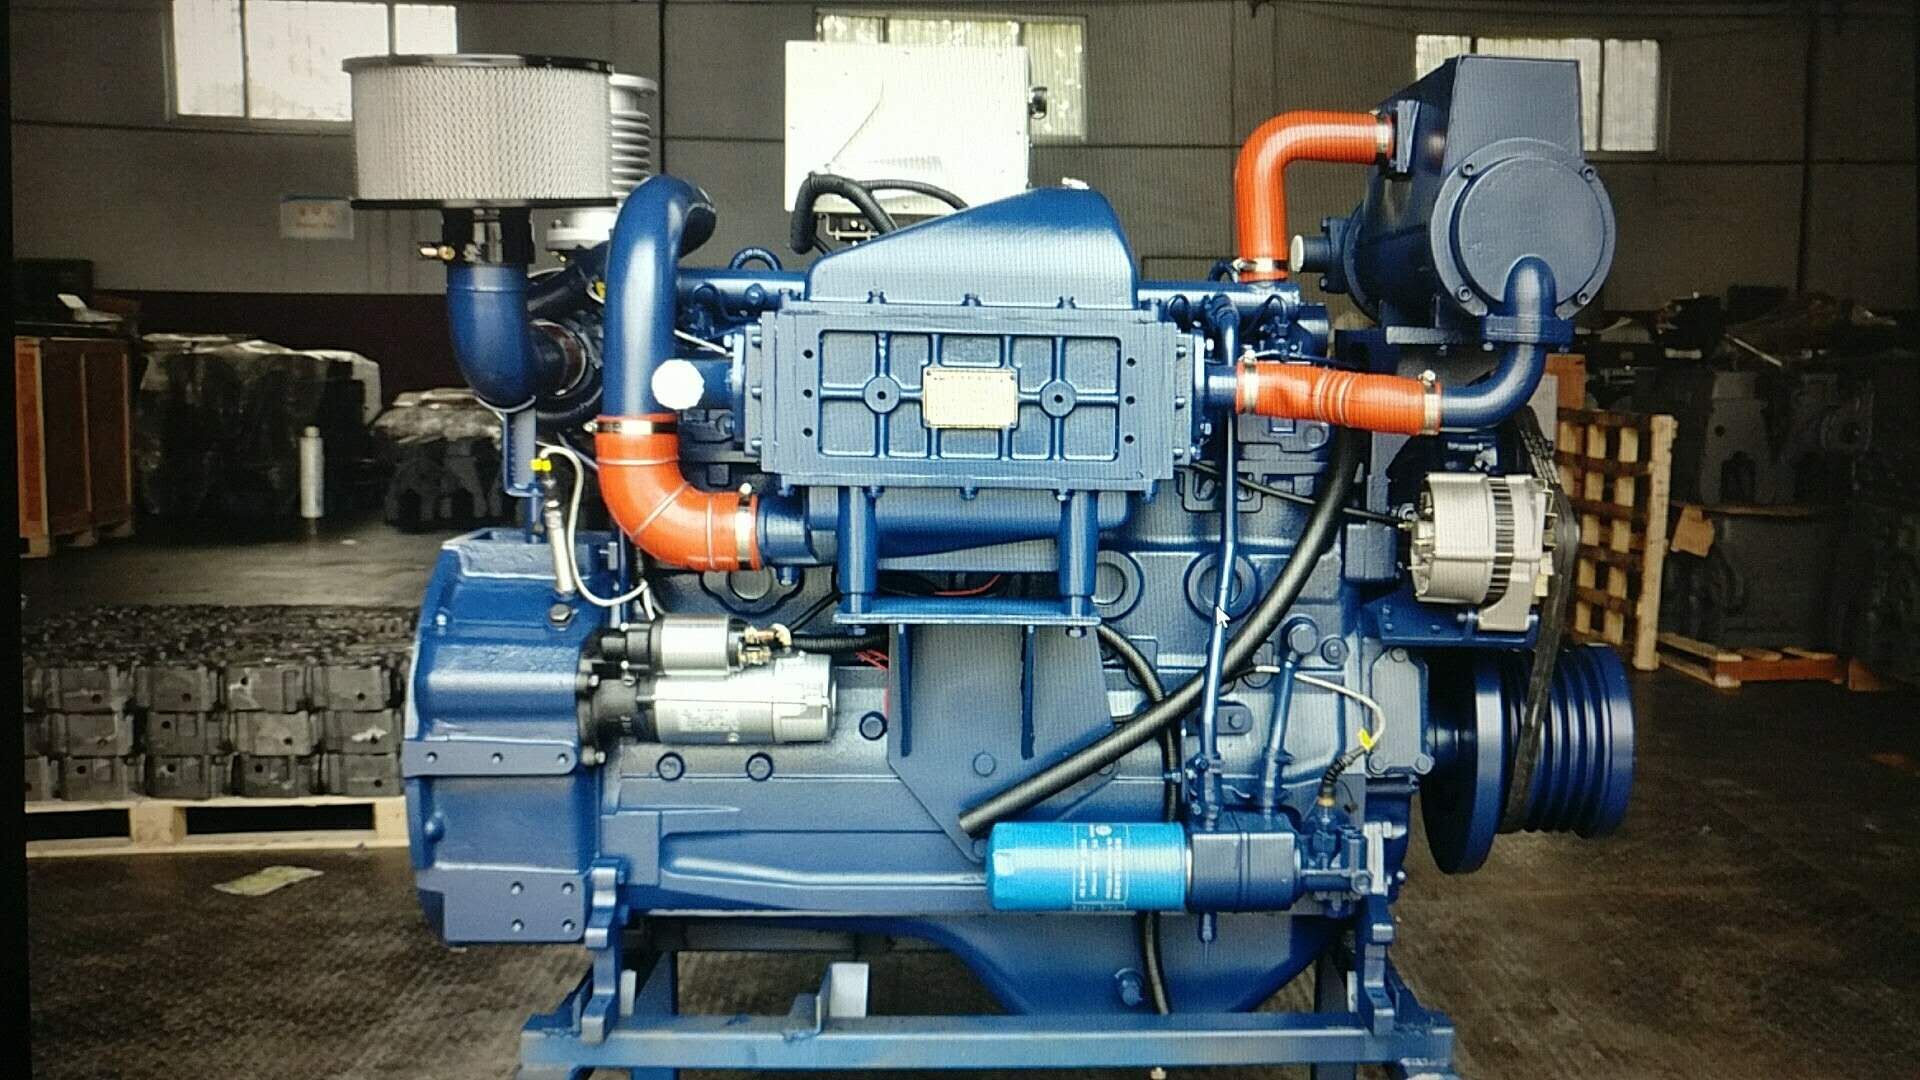 Deutz TD226B-3 TD226B-4 TD226B-6 diesel engine